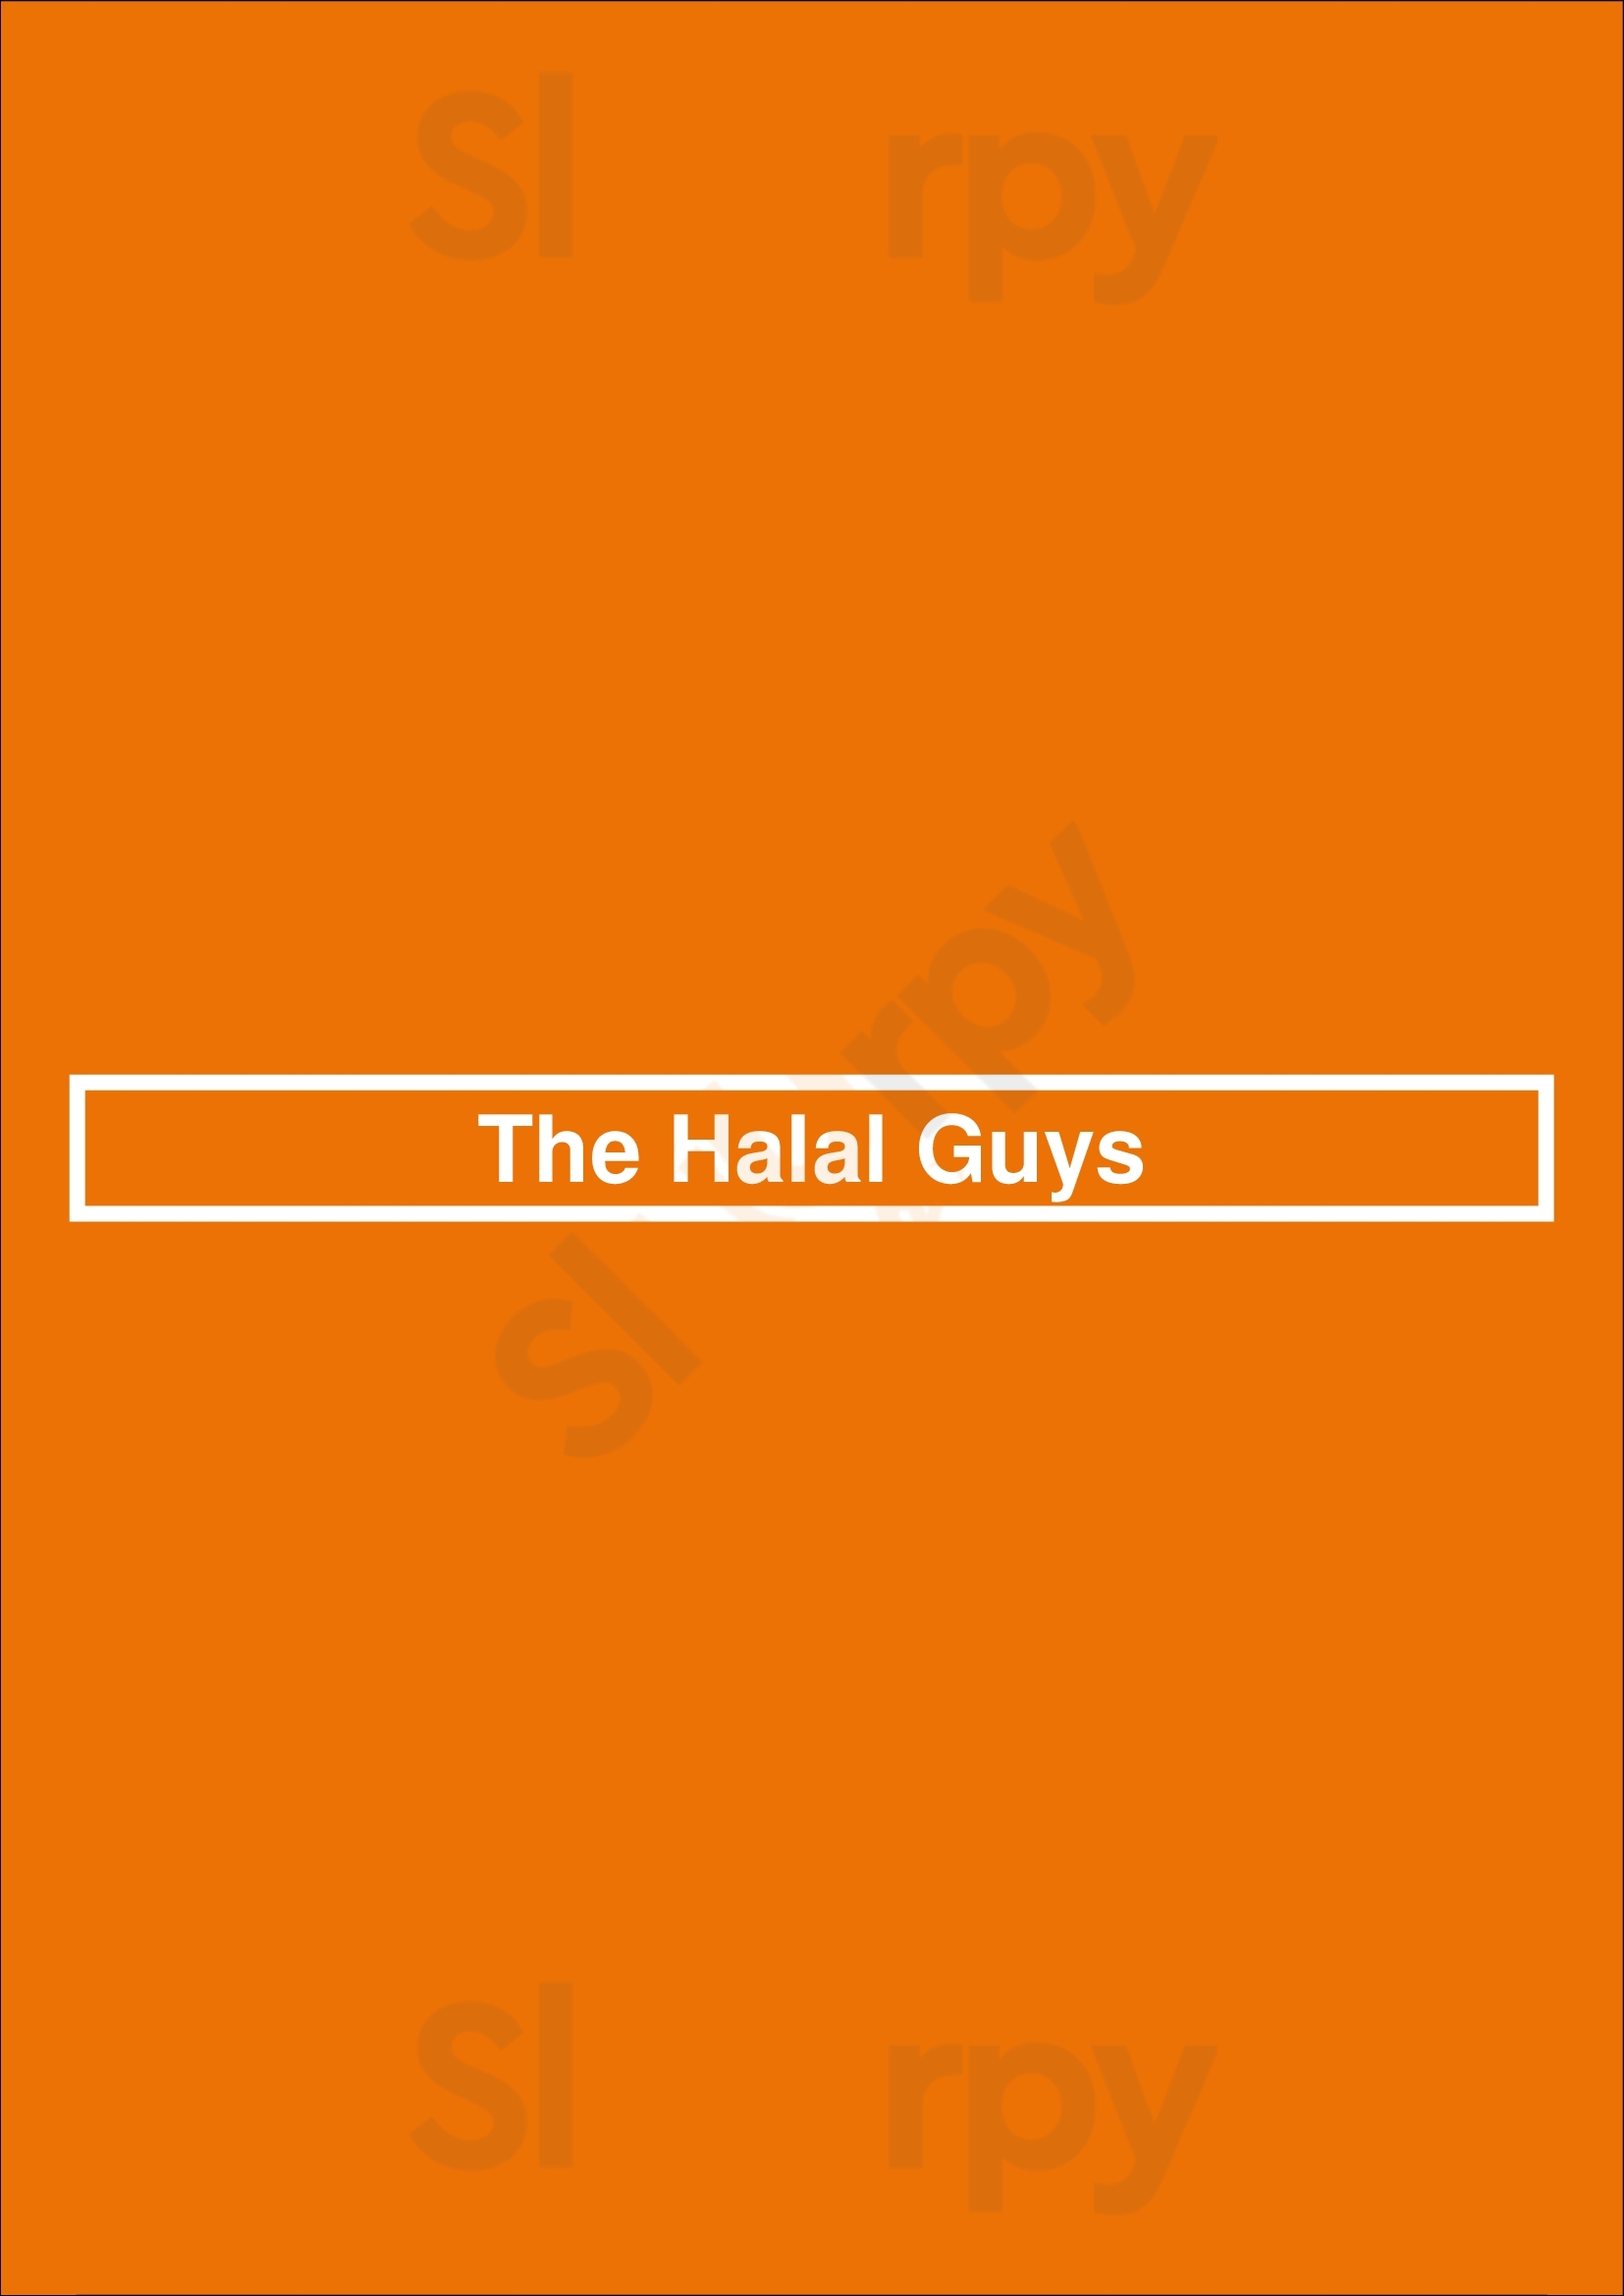 The Halal Guys Los Angeles Menu - 1